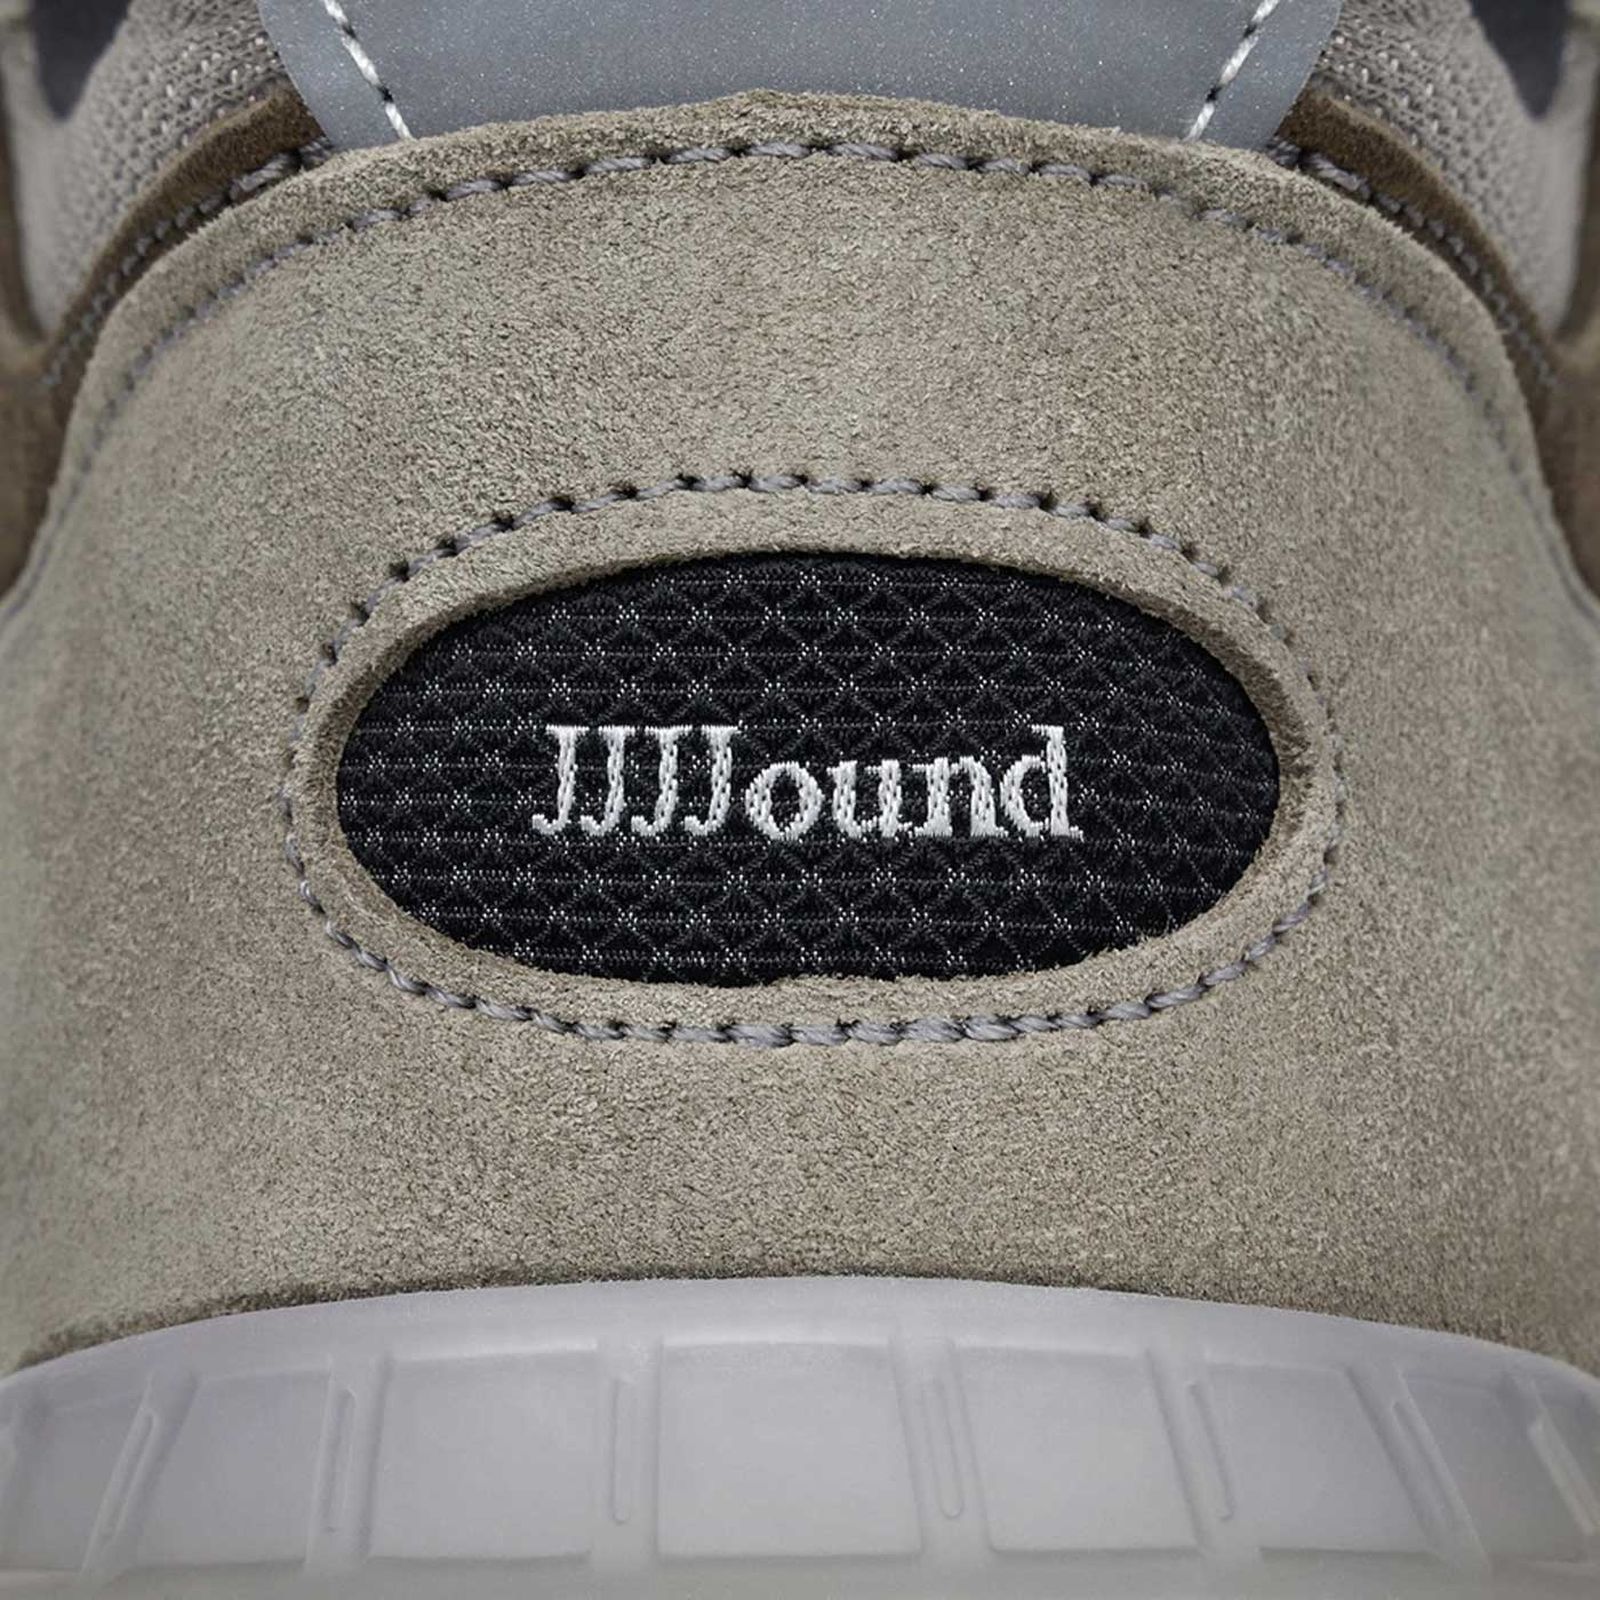 jjjjound-new-balance-991-(15)